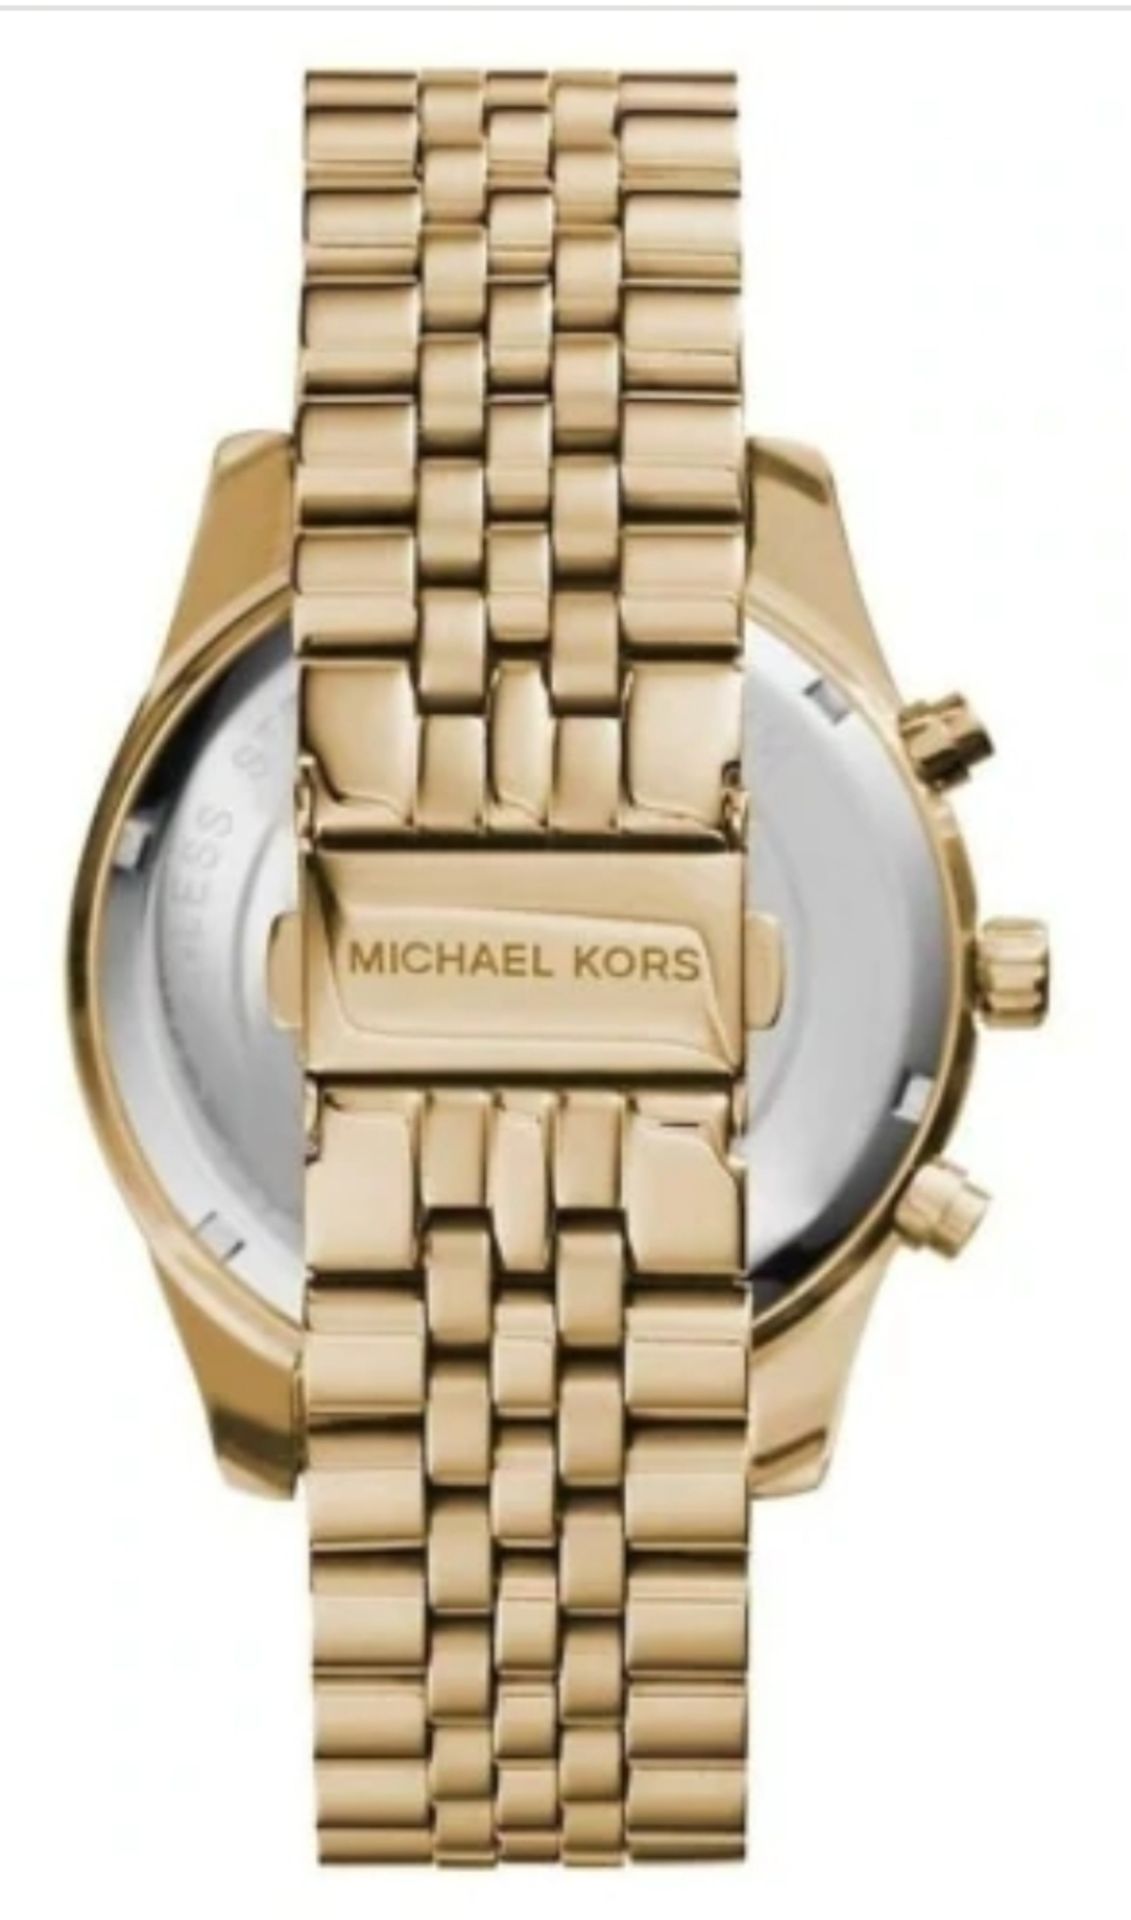 Michael Kors MK8446 Men's Lexington Watch - Image 3 of 8